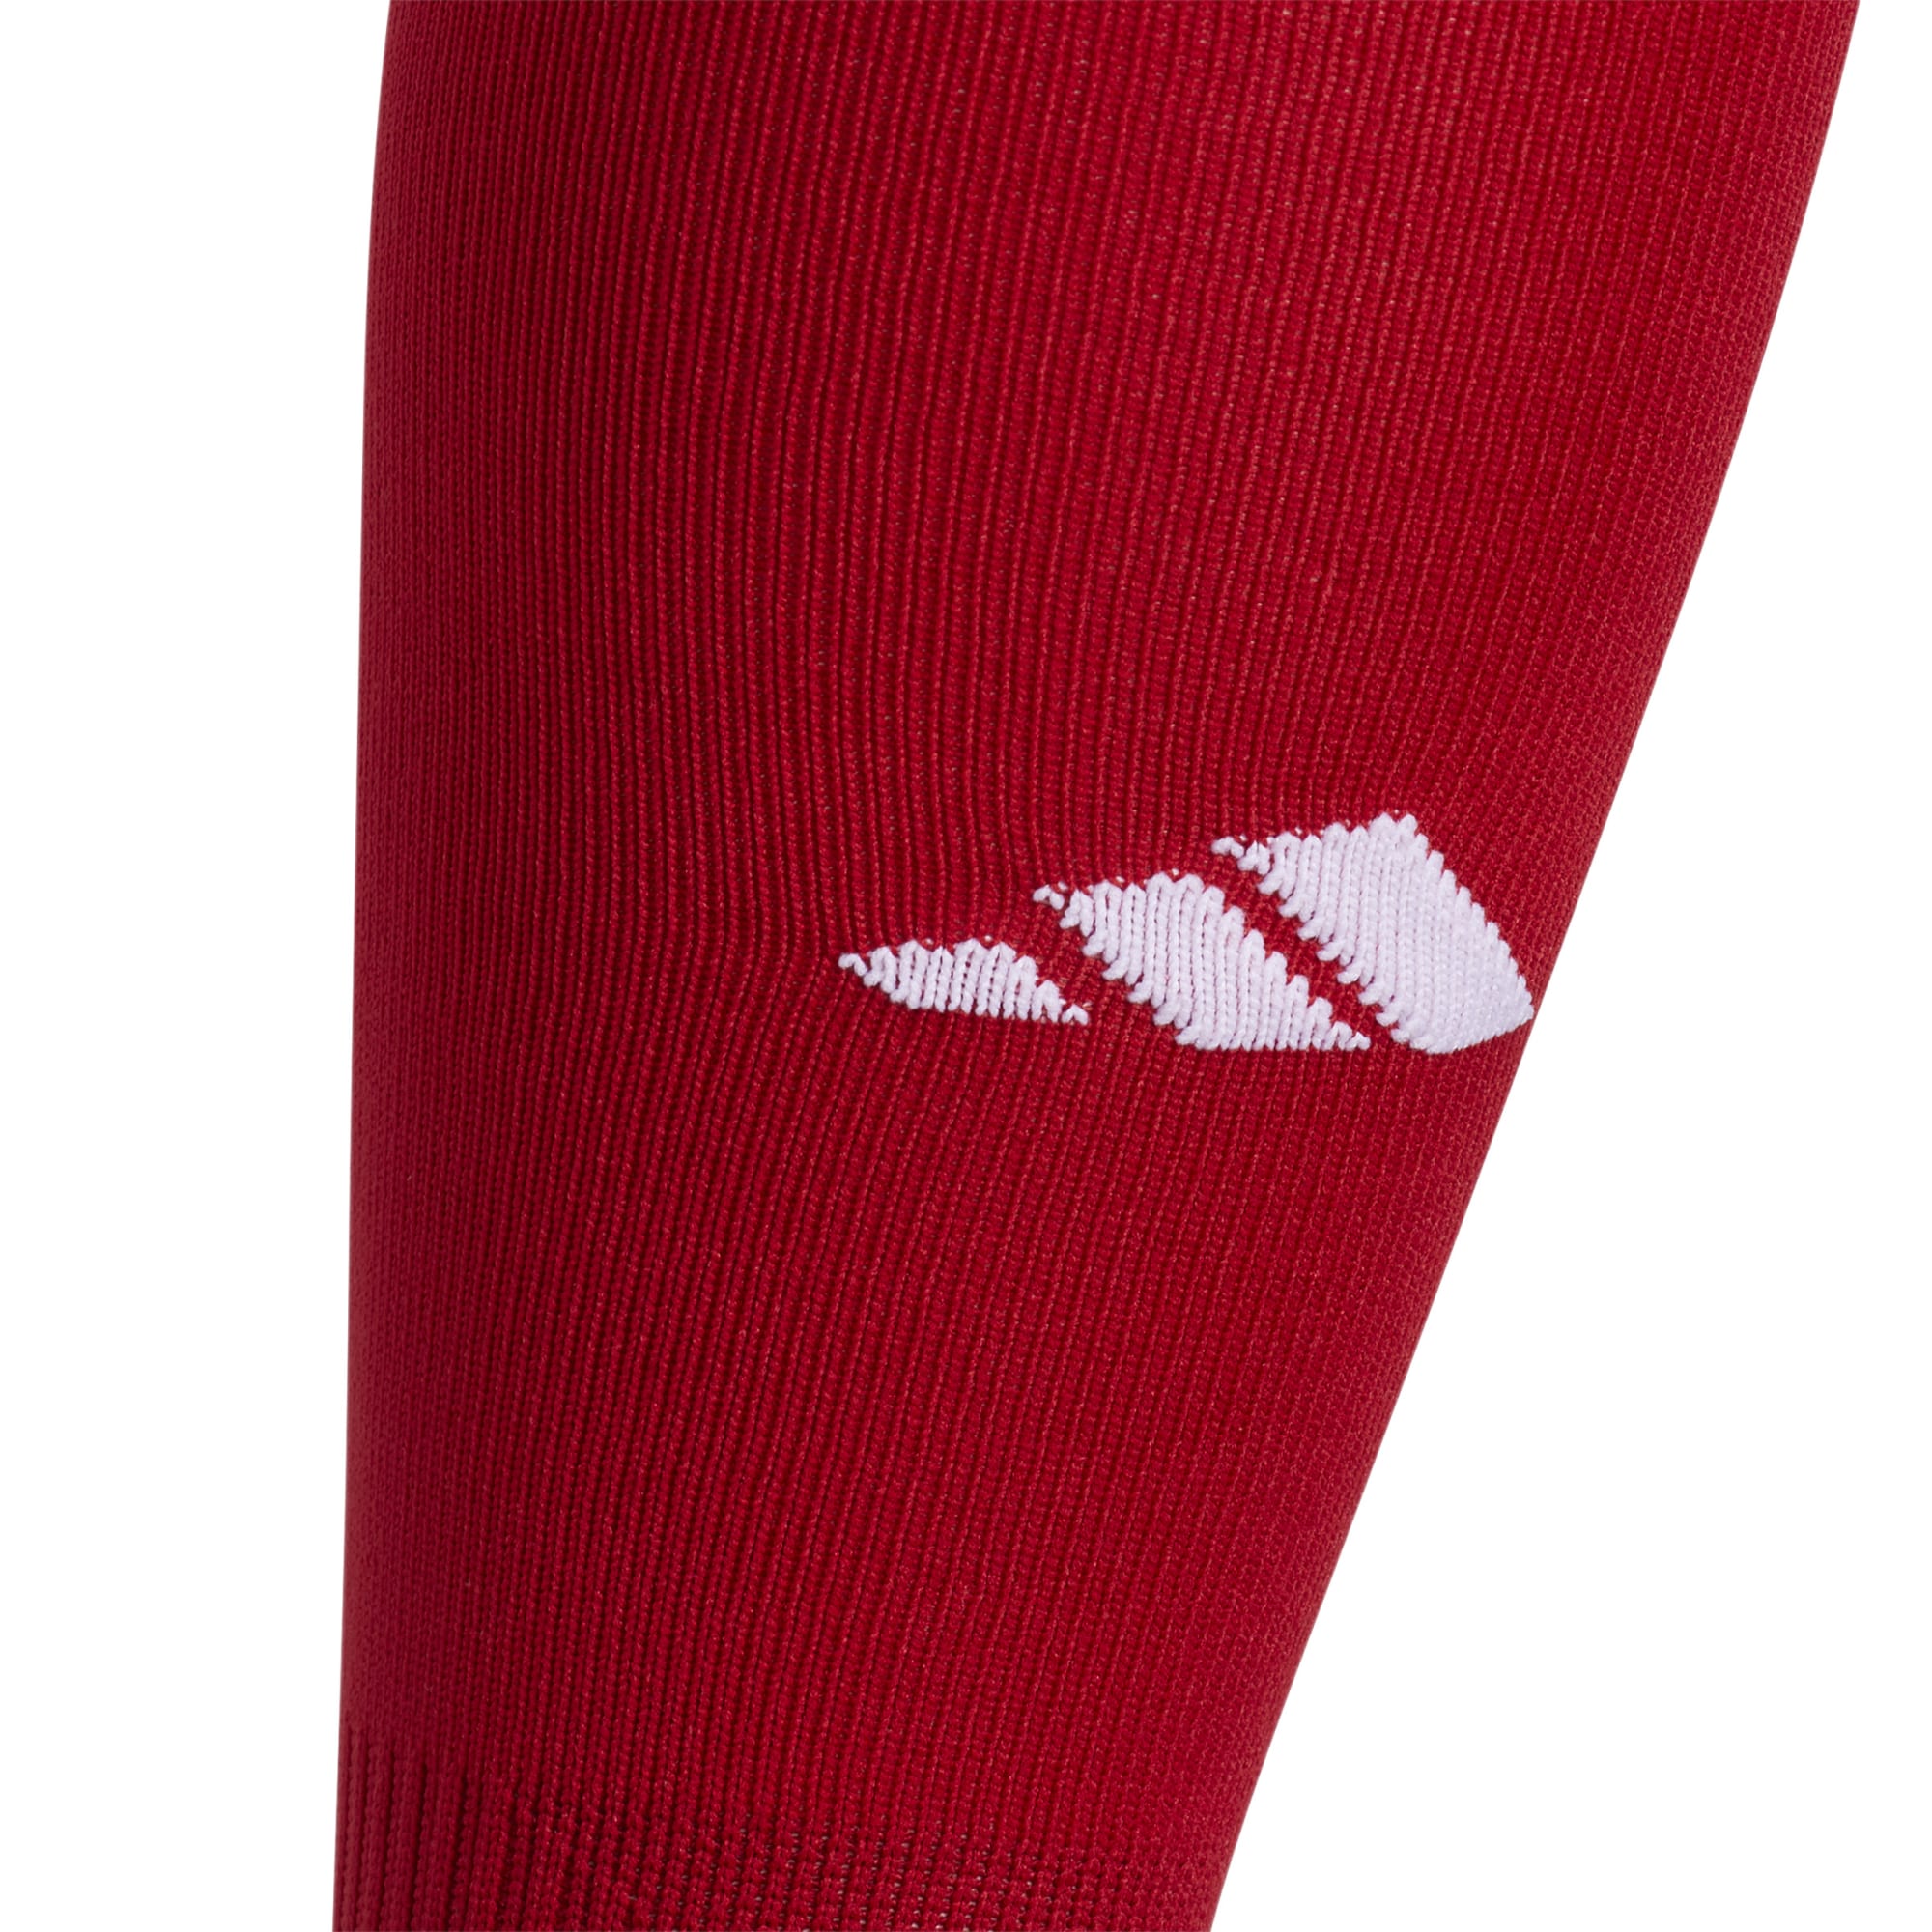 Adidas Metro Sock (Red) - GB4214